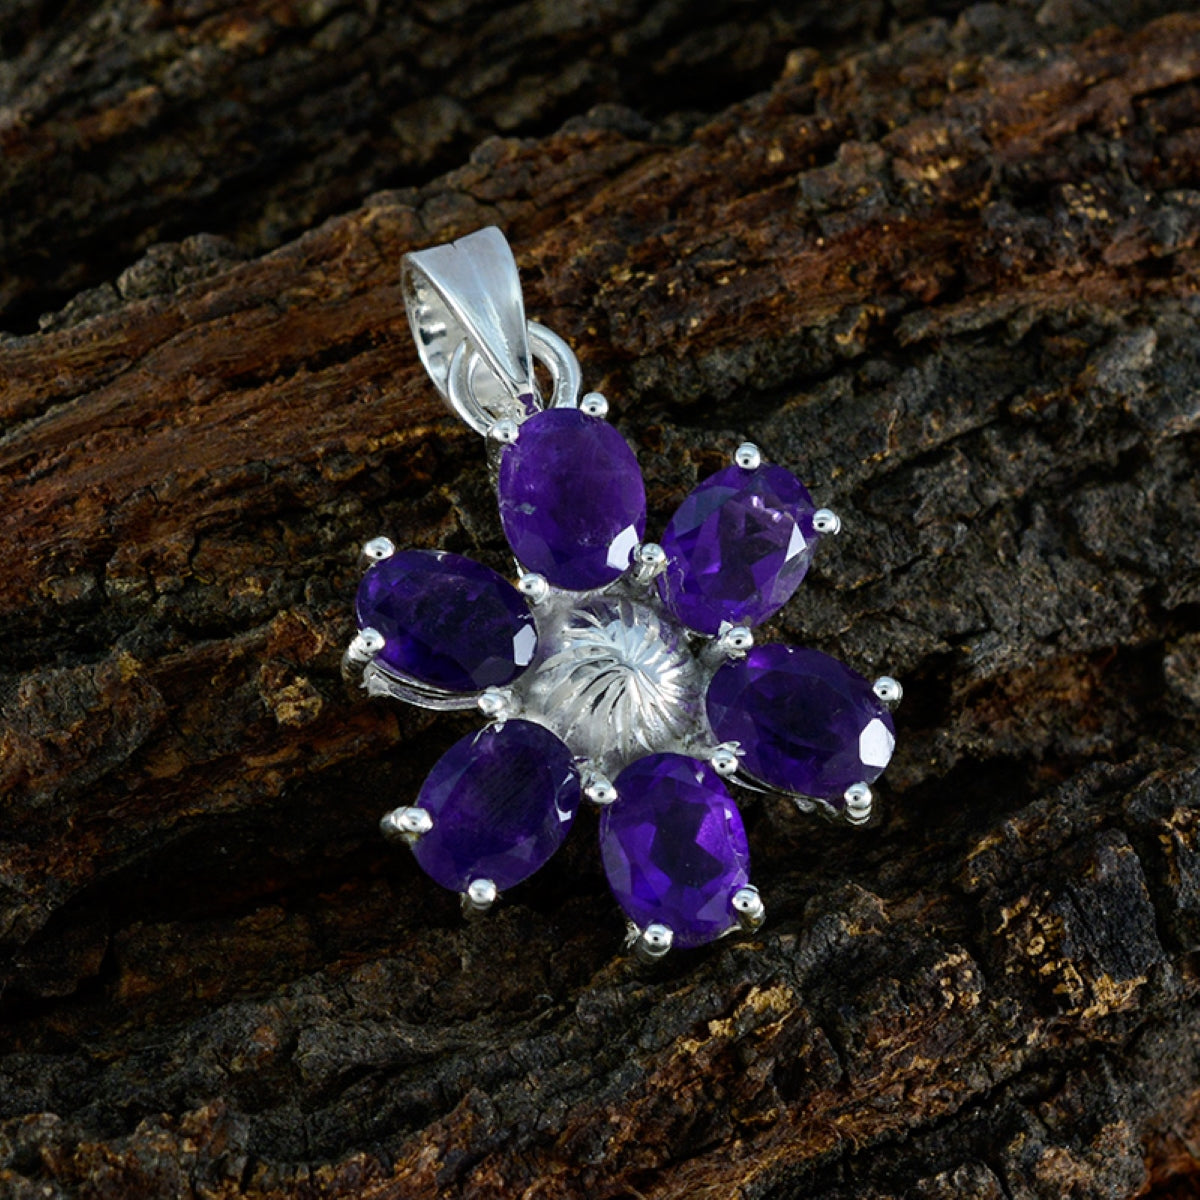 Riyo Pleasing Gems ovale gefacetteerde paarse Amethist zilveren hanger cadeau voor verloving